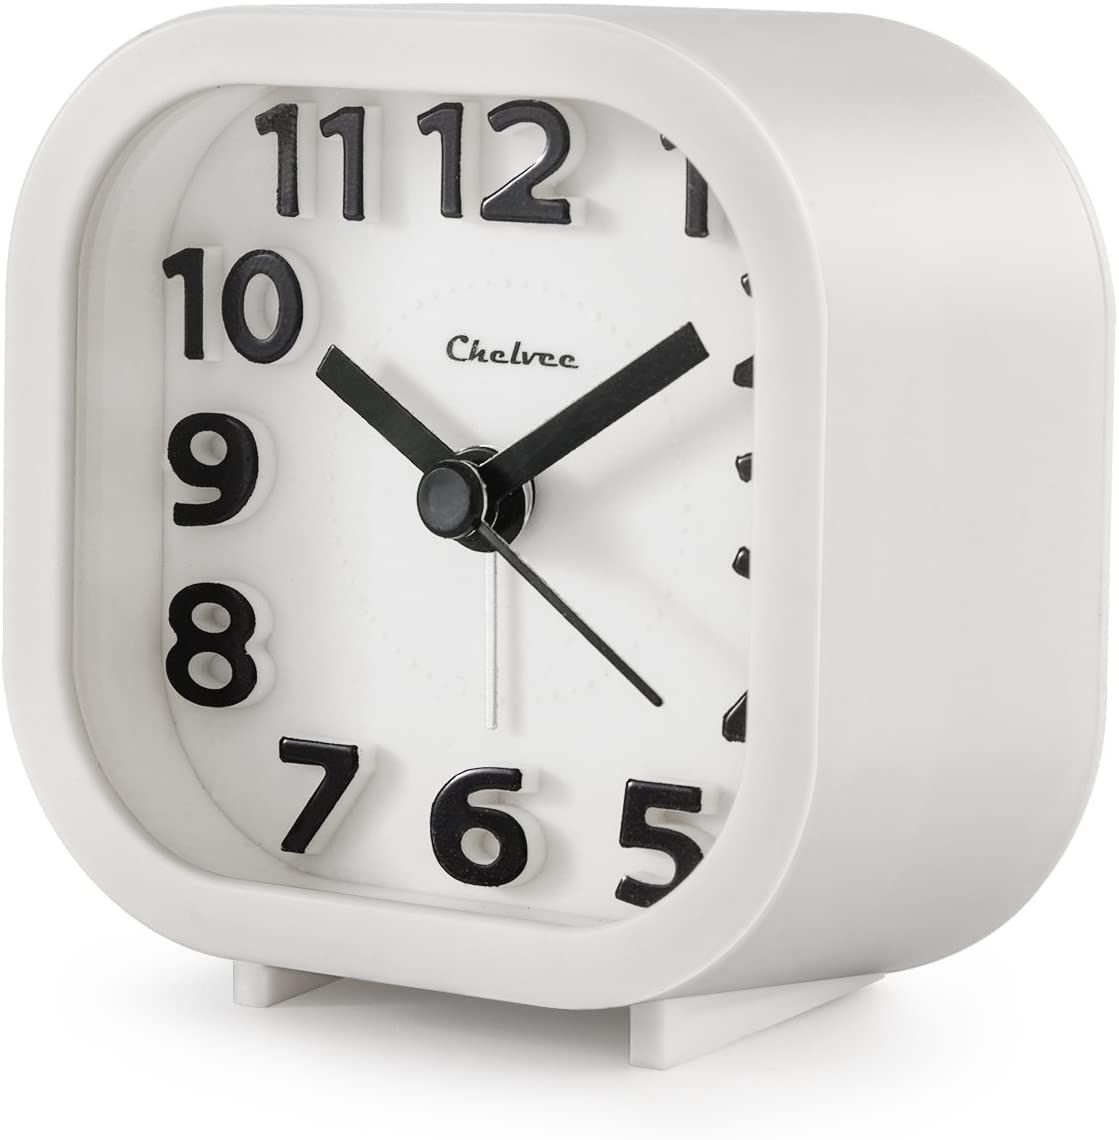 Alarm Clock, Chelvee 2” Quartz Analog Travel Alarm Clock with Night Light, Ultra Small, Silent with No Ticking (White) Condition is New.